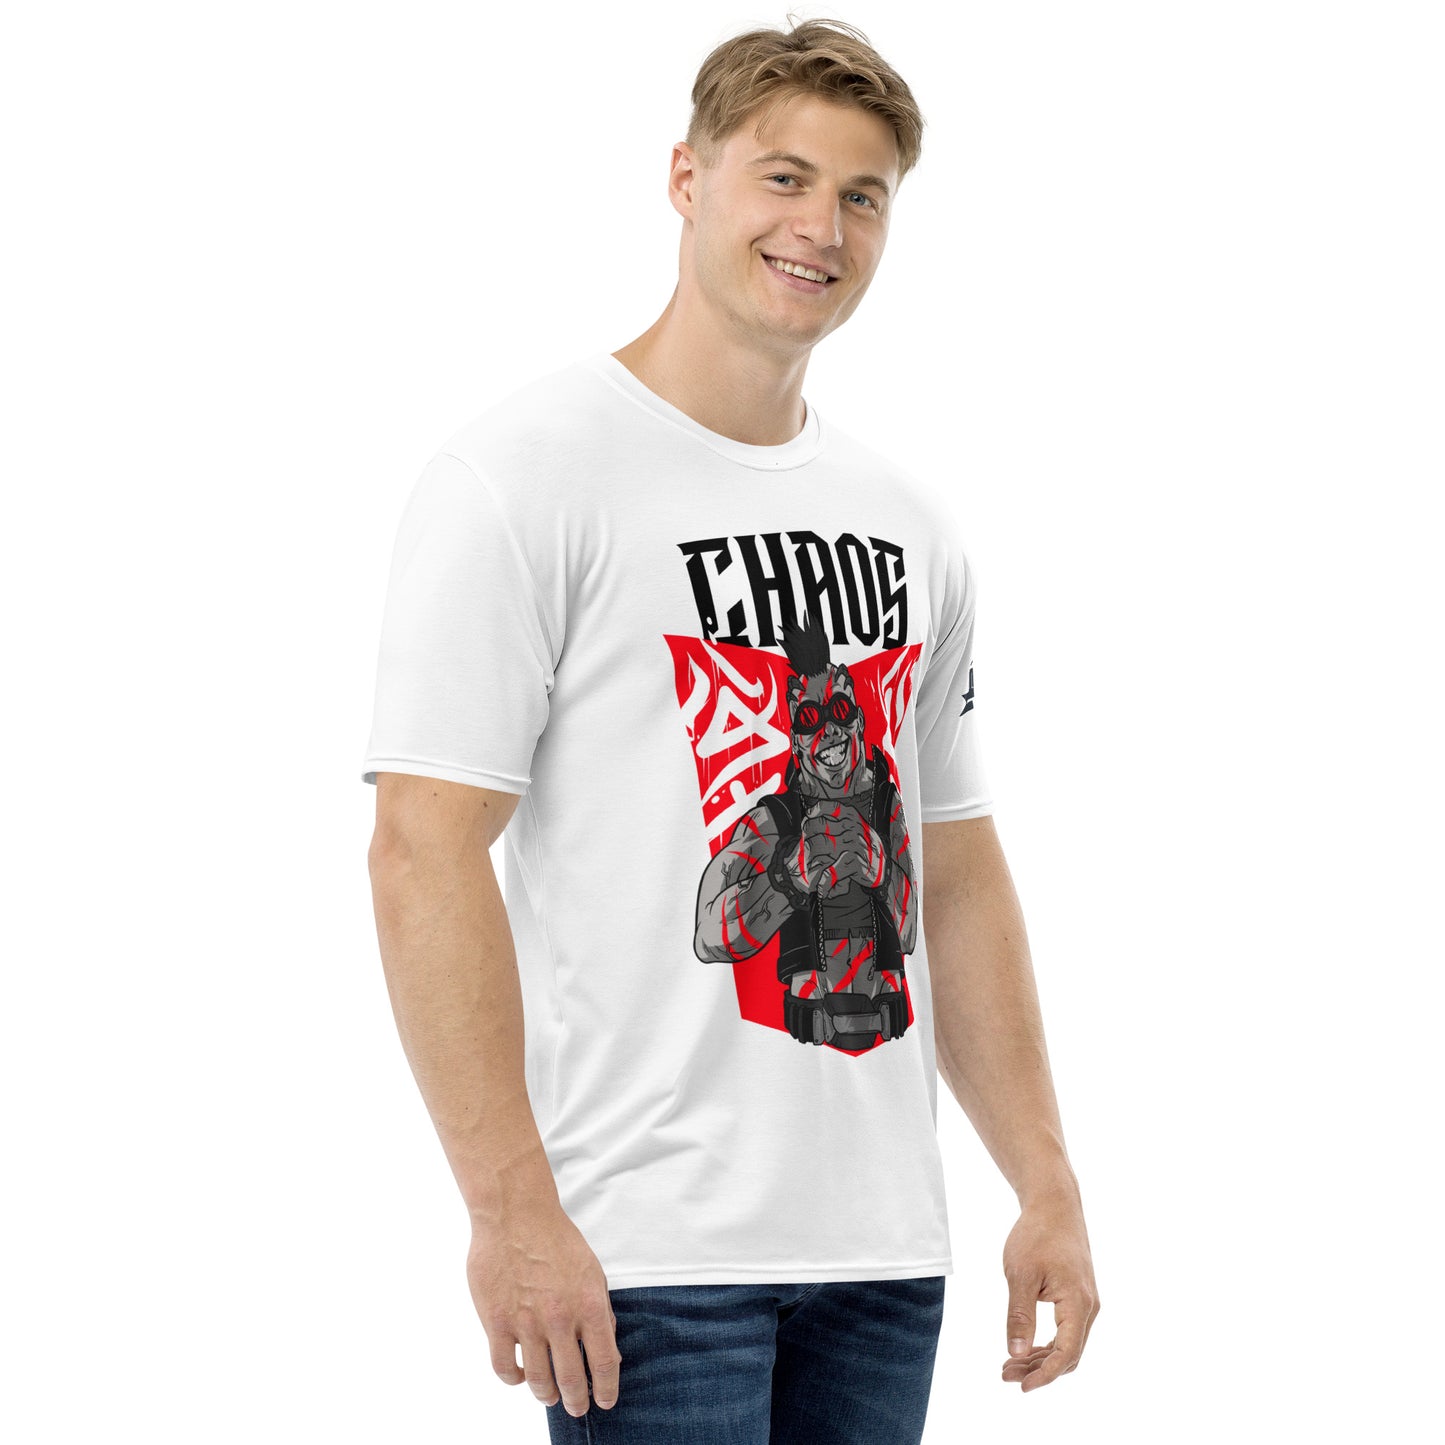 'Chaos Collection' Chaos Men's t-shirt